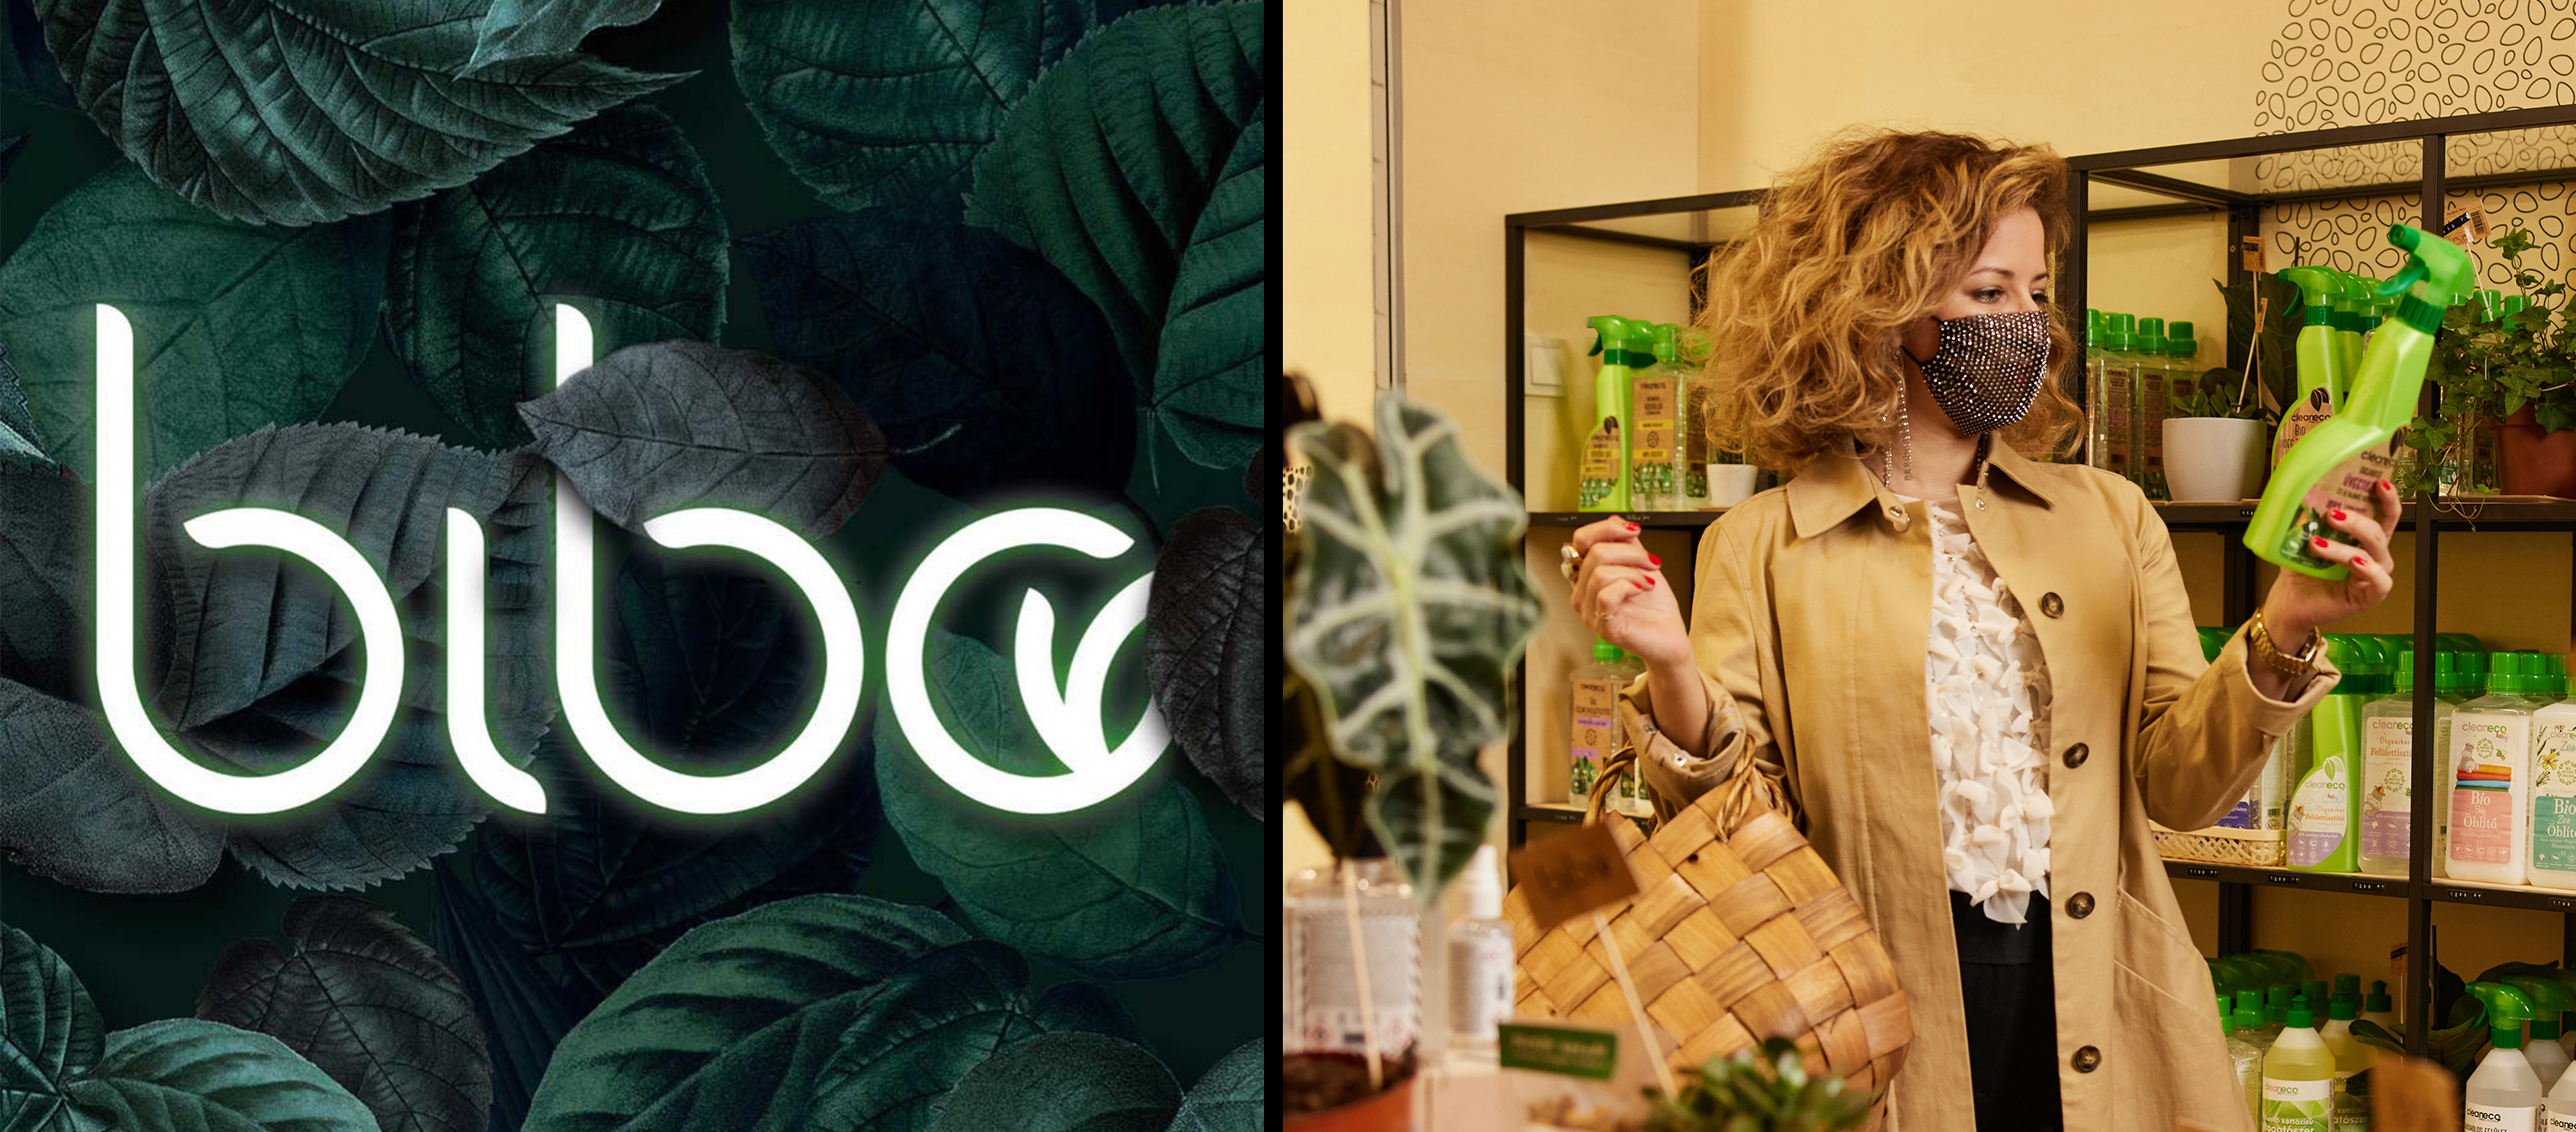 Megnyitott a Bibo 'the eco lifestyle shop'